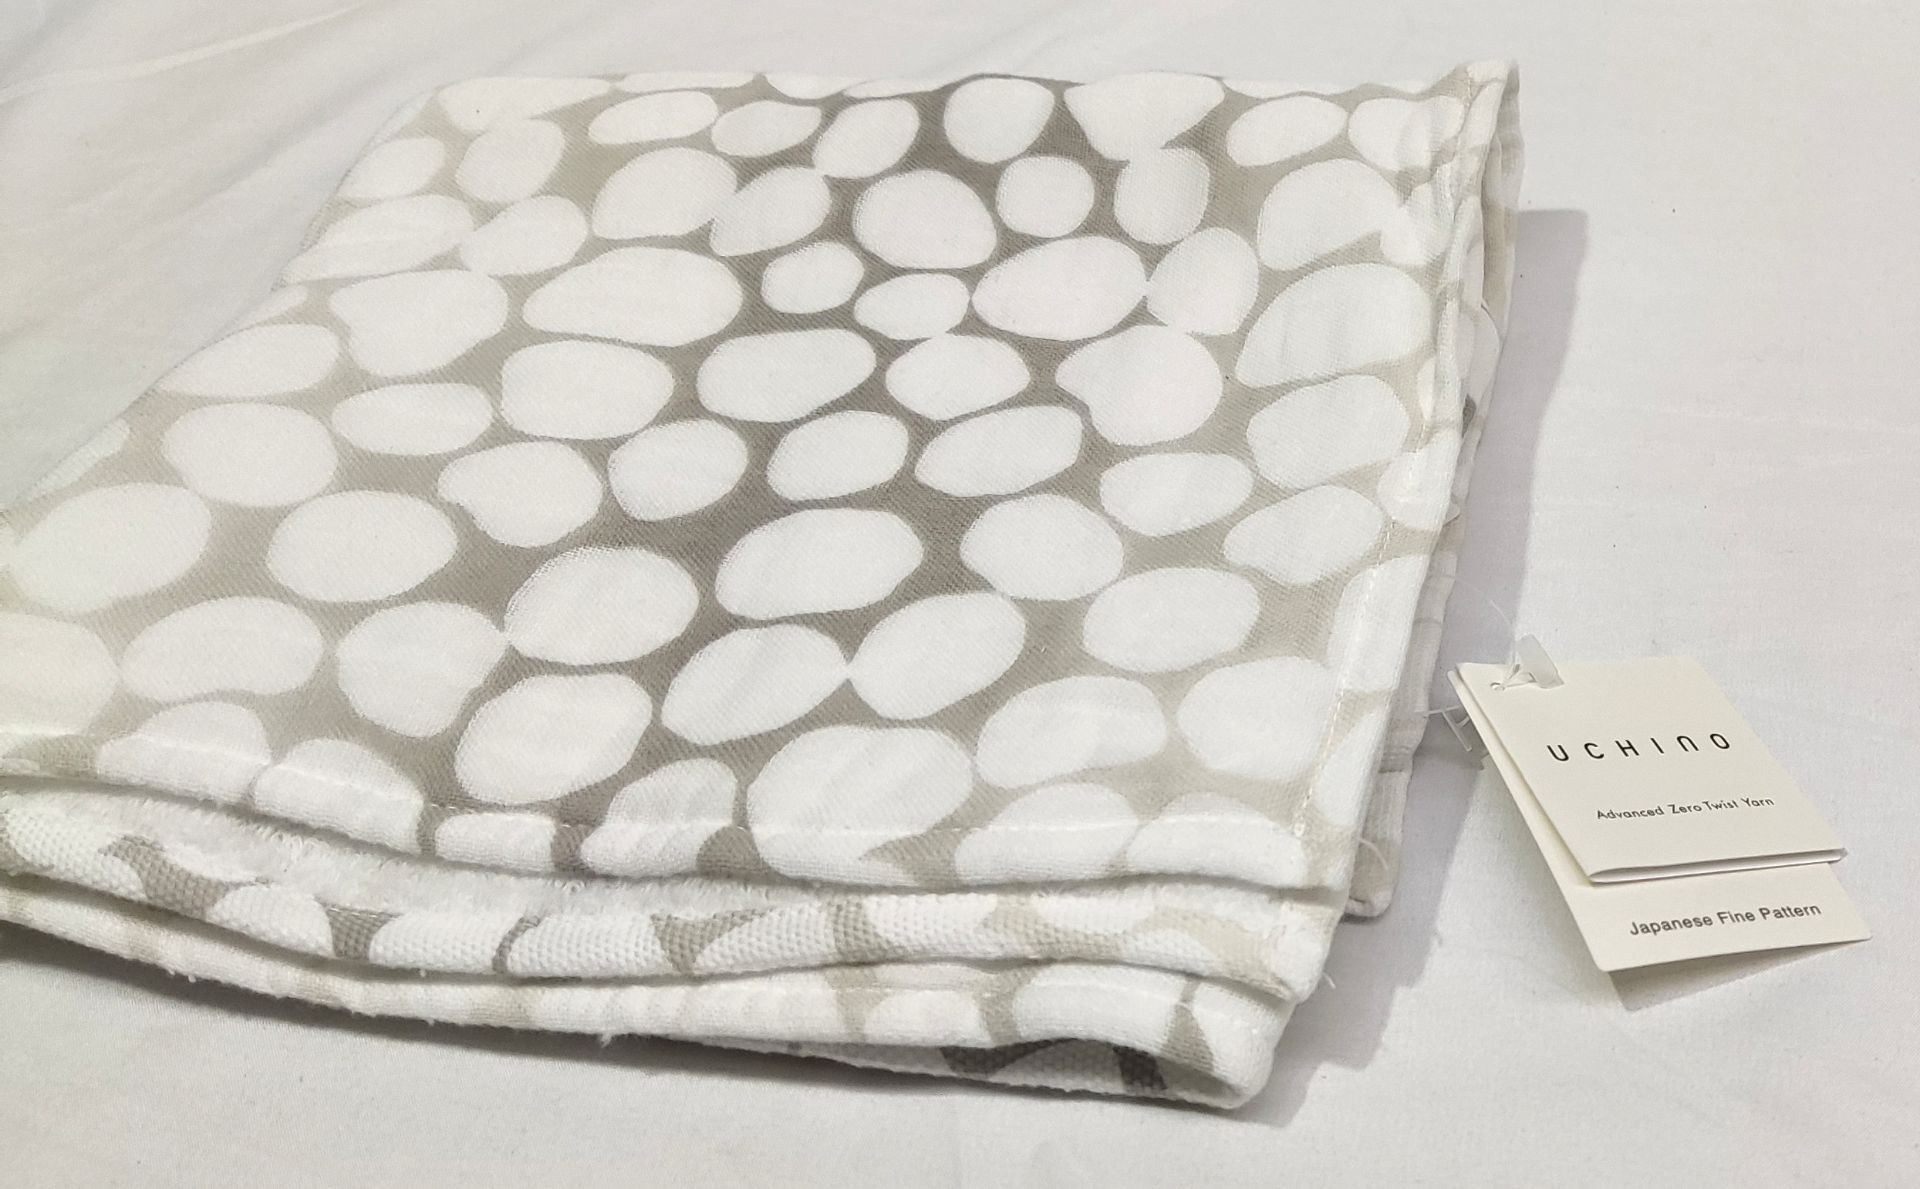 1 x UCHINO Japanese Fine Pattern Hand Towel 50X100cm - Grey - Original RRP £69.96 - Ref: 7395403/